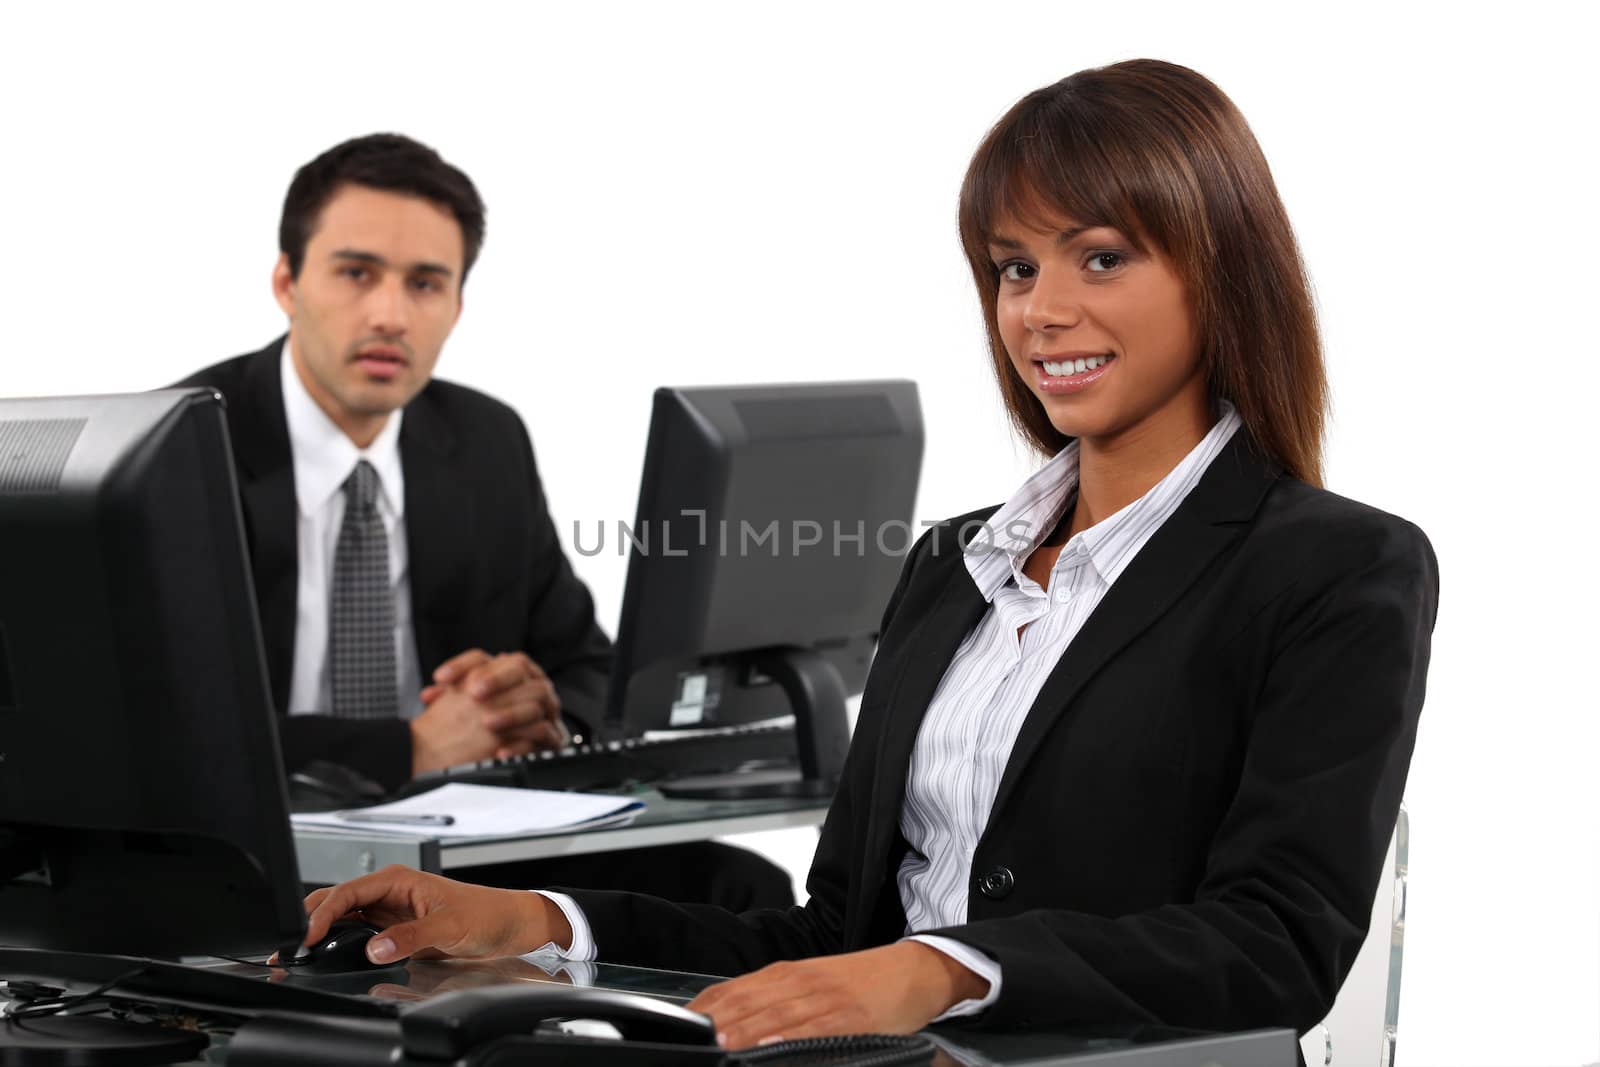 Business professionals working behind their desks by phovoir